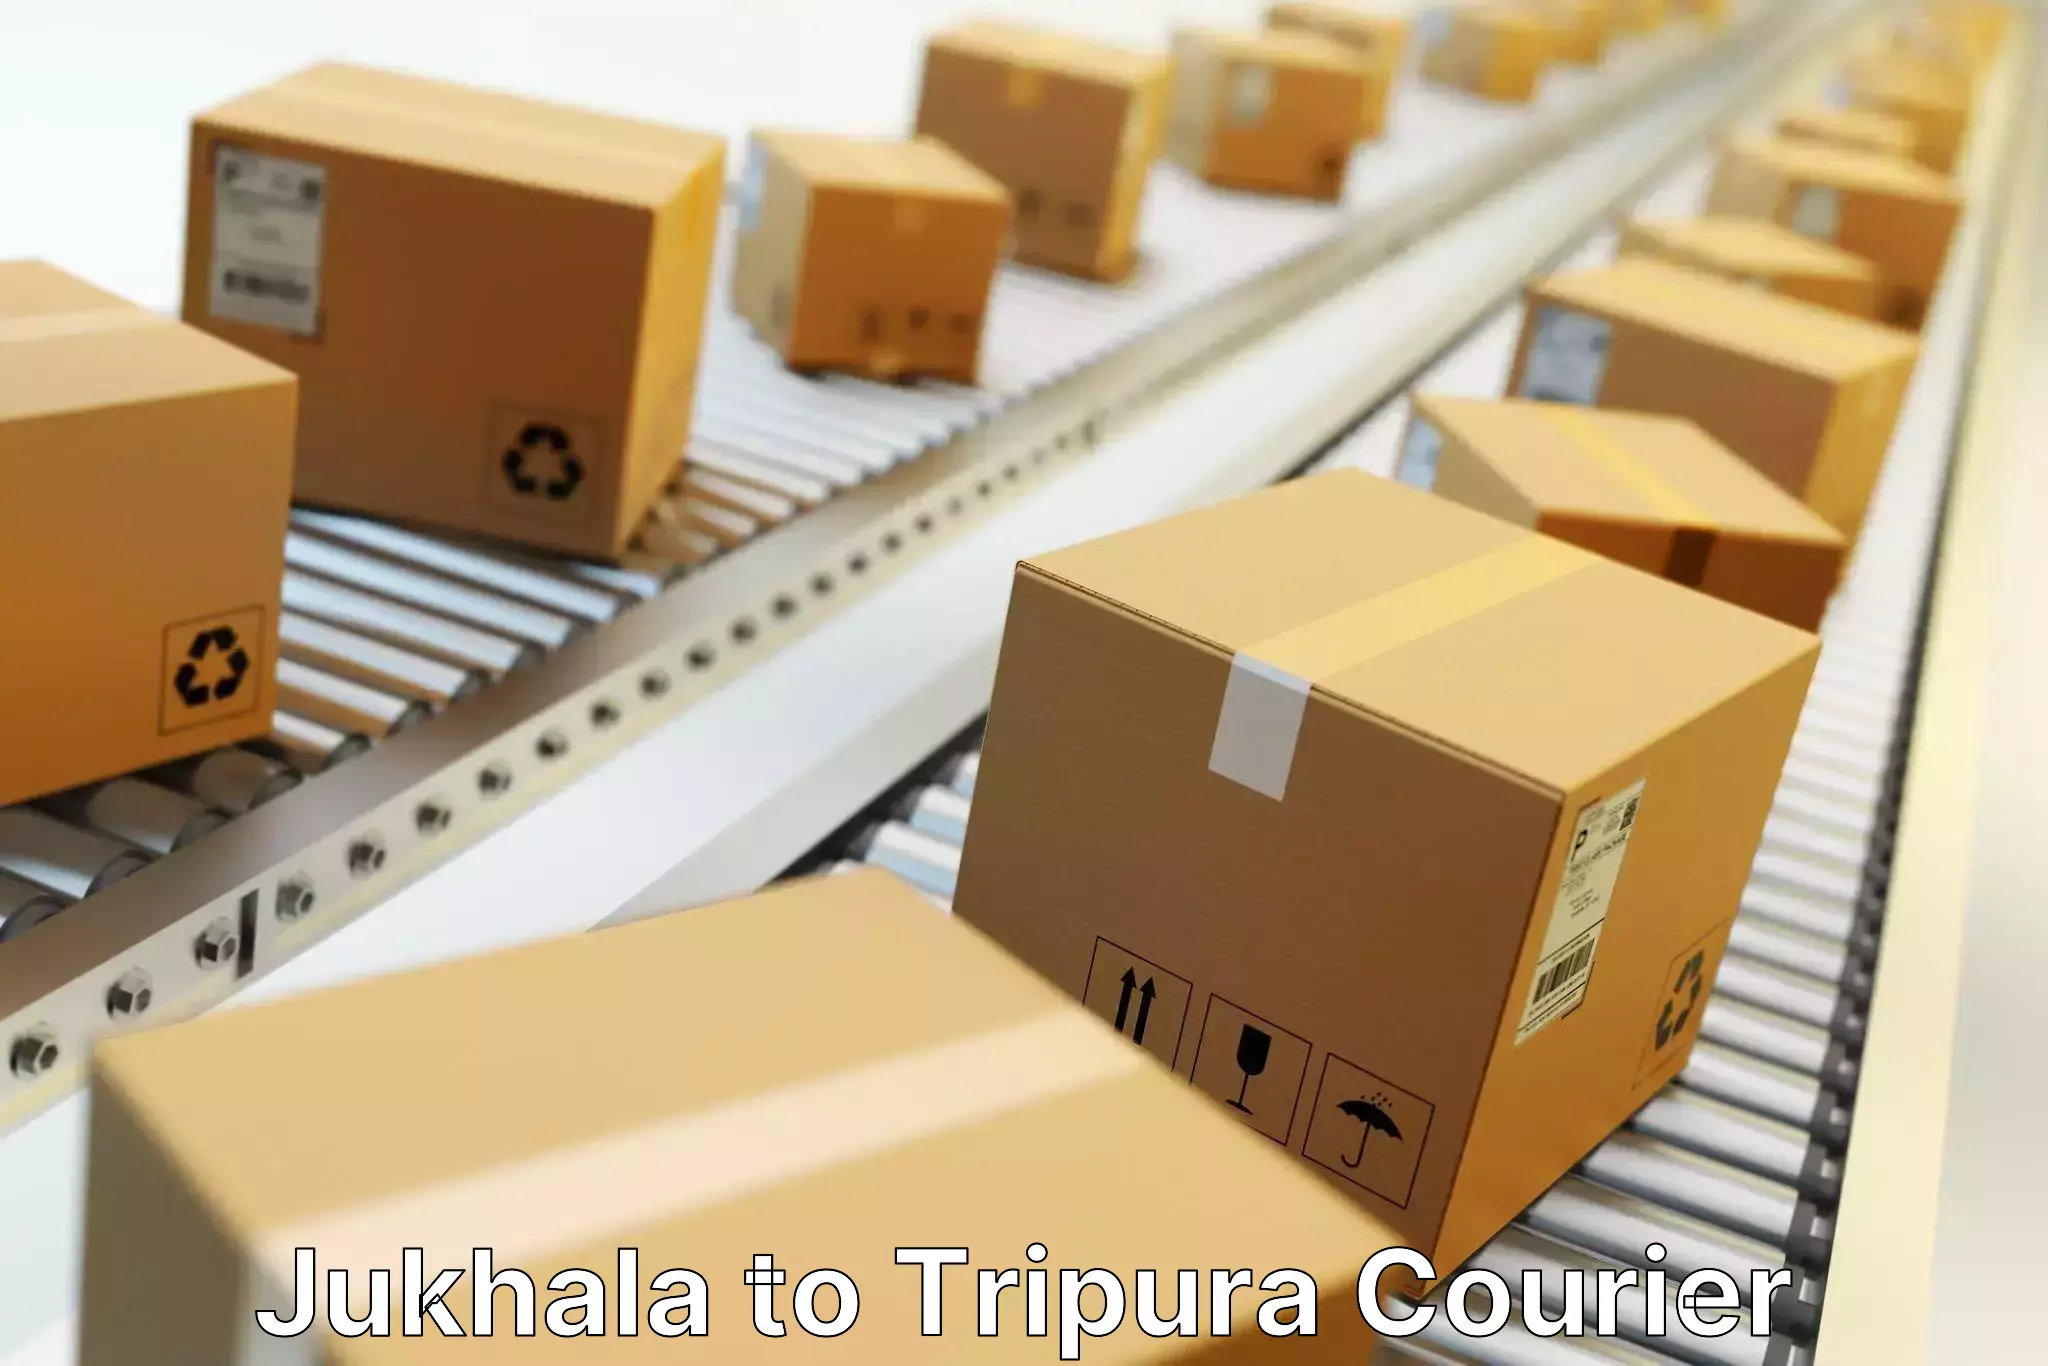 Nationwide delivery network Jukhala to Aambasa